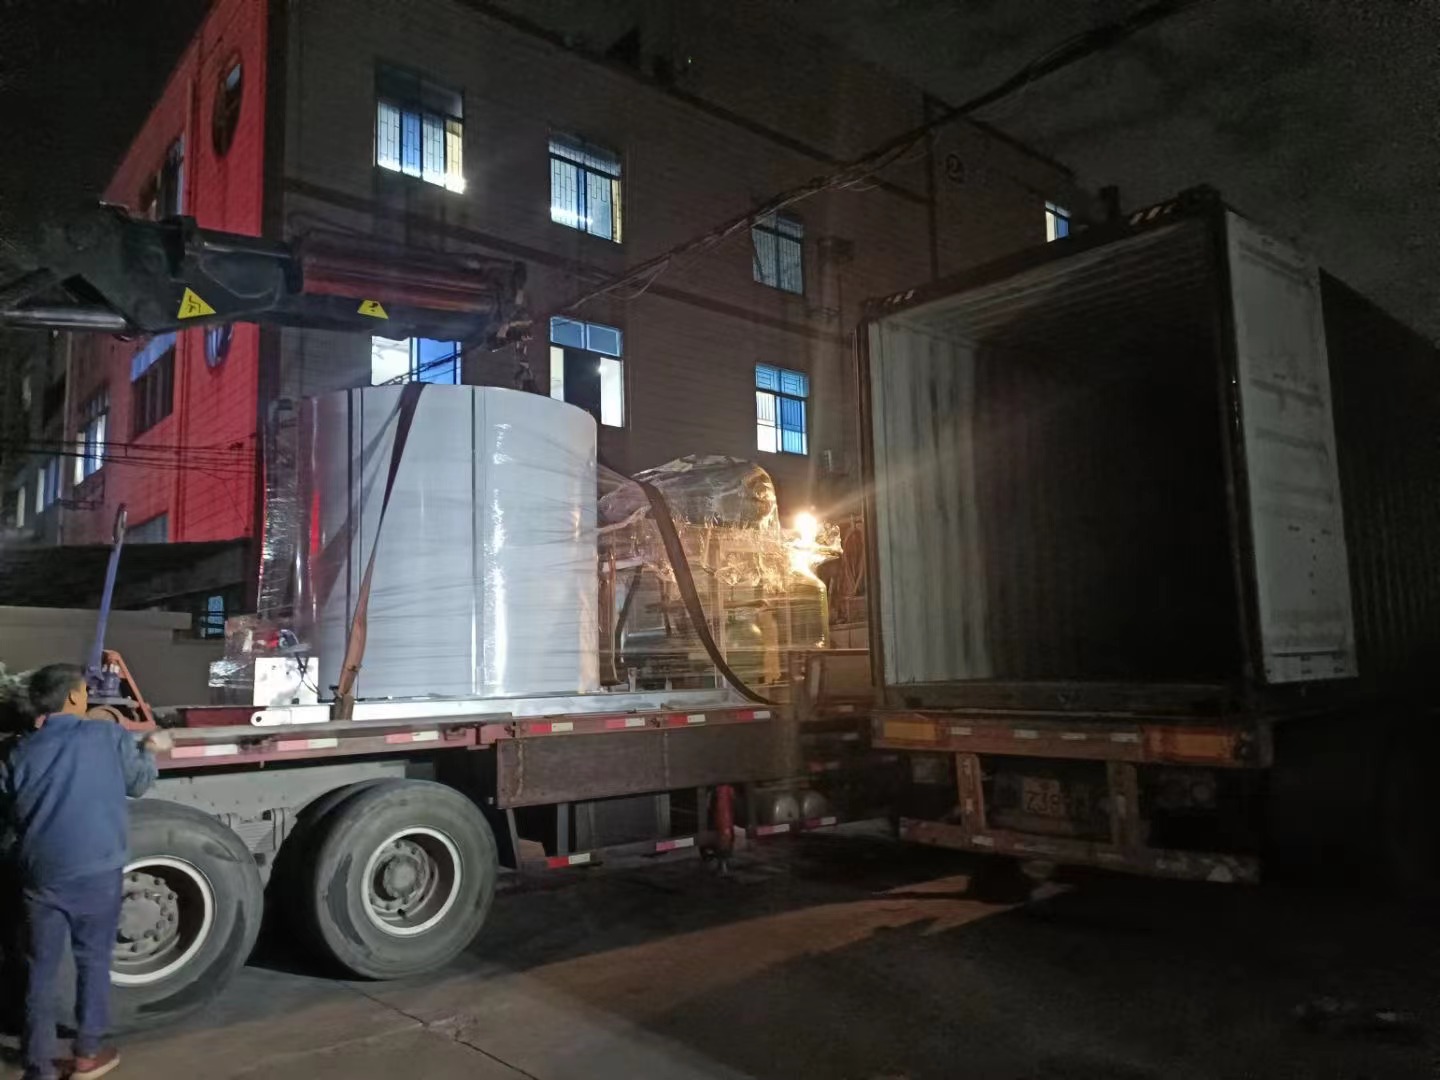 30 ton air-cooled flake ice machine sent to Peru